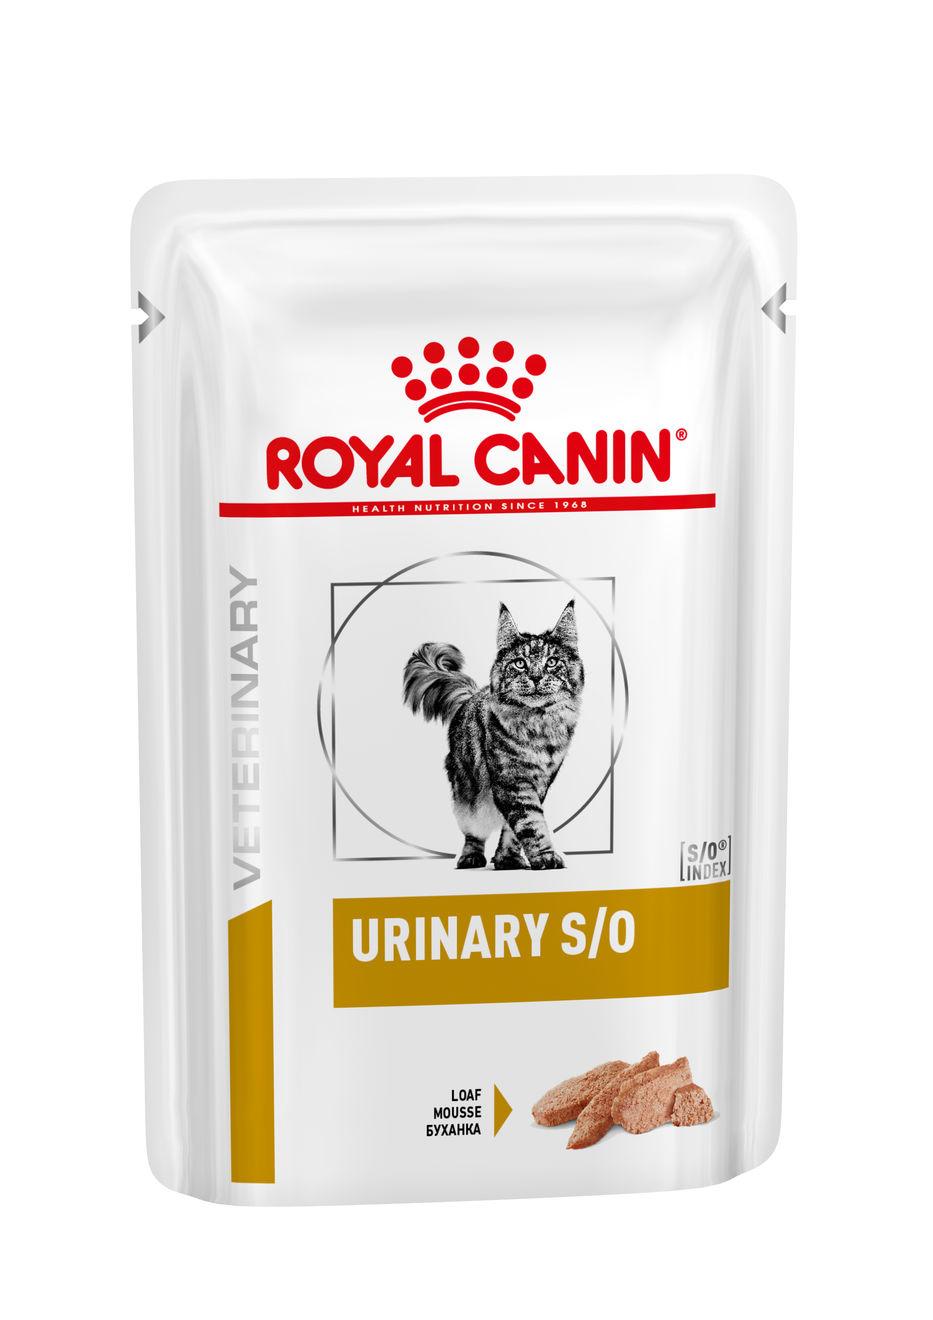 Royal Canin Veterinary Health Nutrition Cat URINARY S/O kapsa in Loaf - 85g